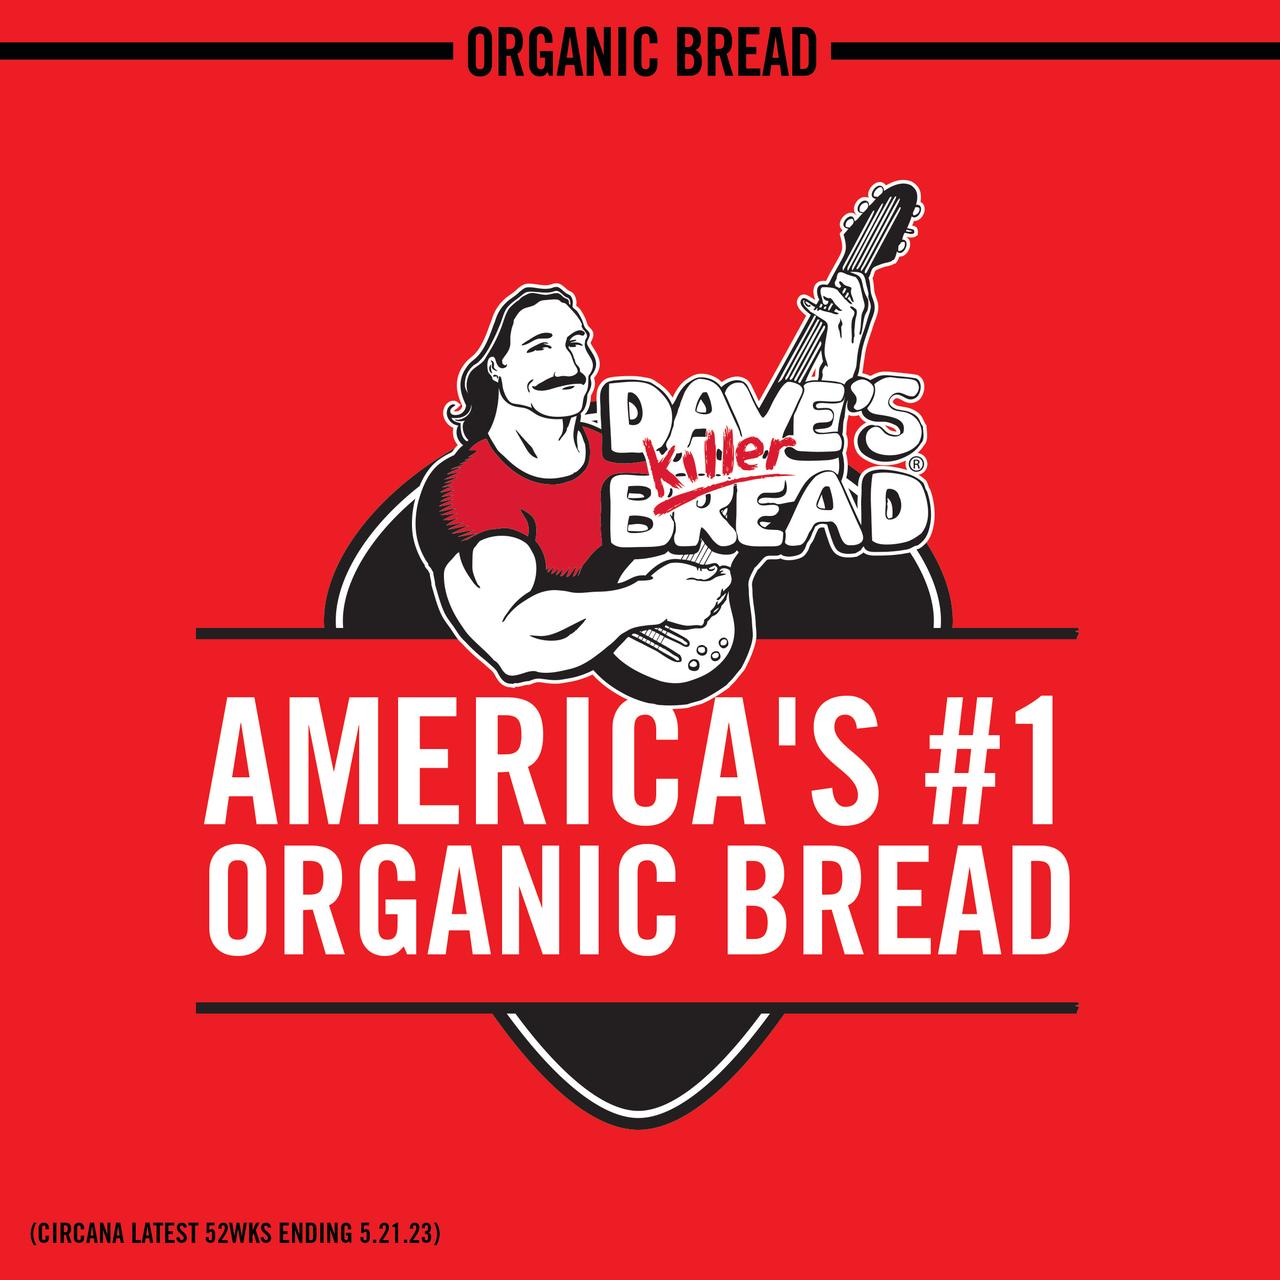 Dave's Killer Bread White Bread Done Right Organic Bread Loaf, 24 oz - image 5 of 15